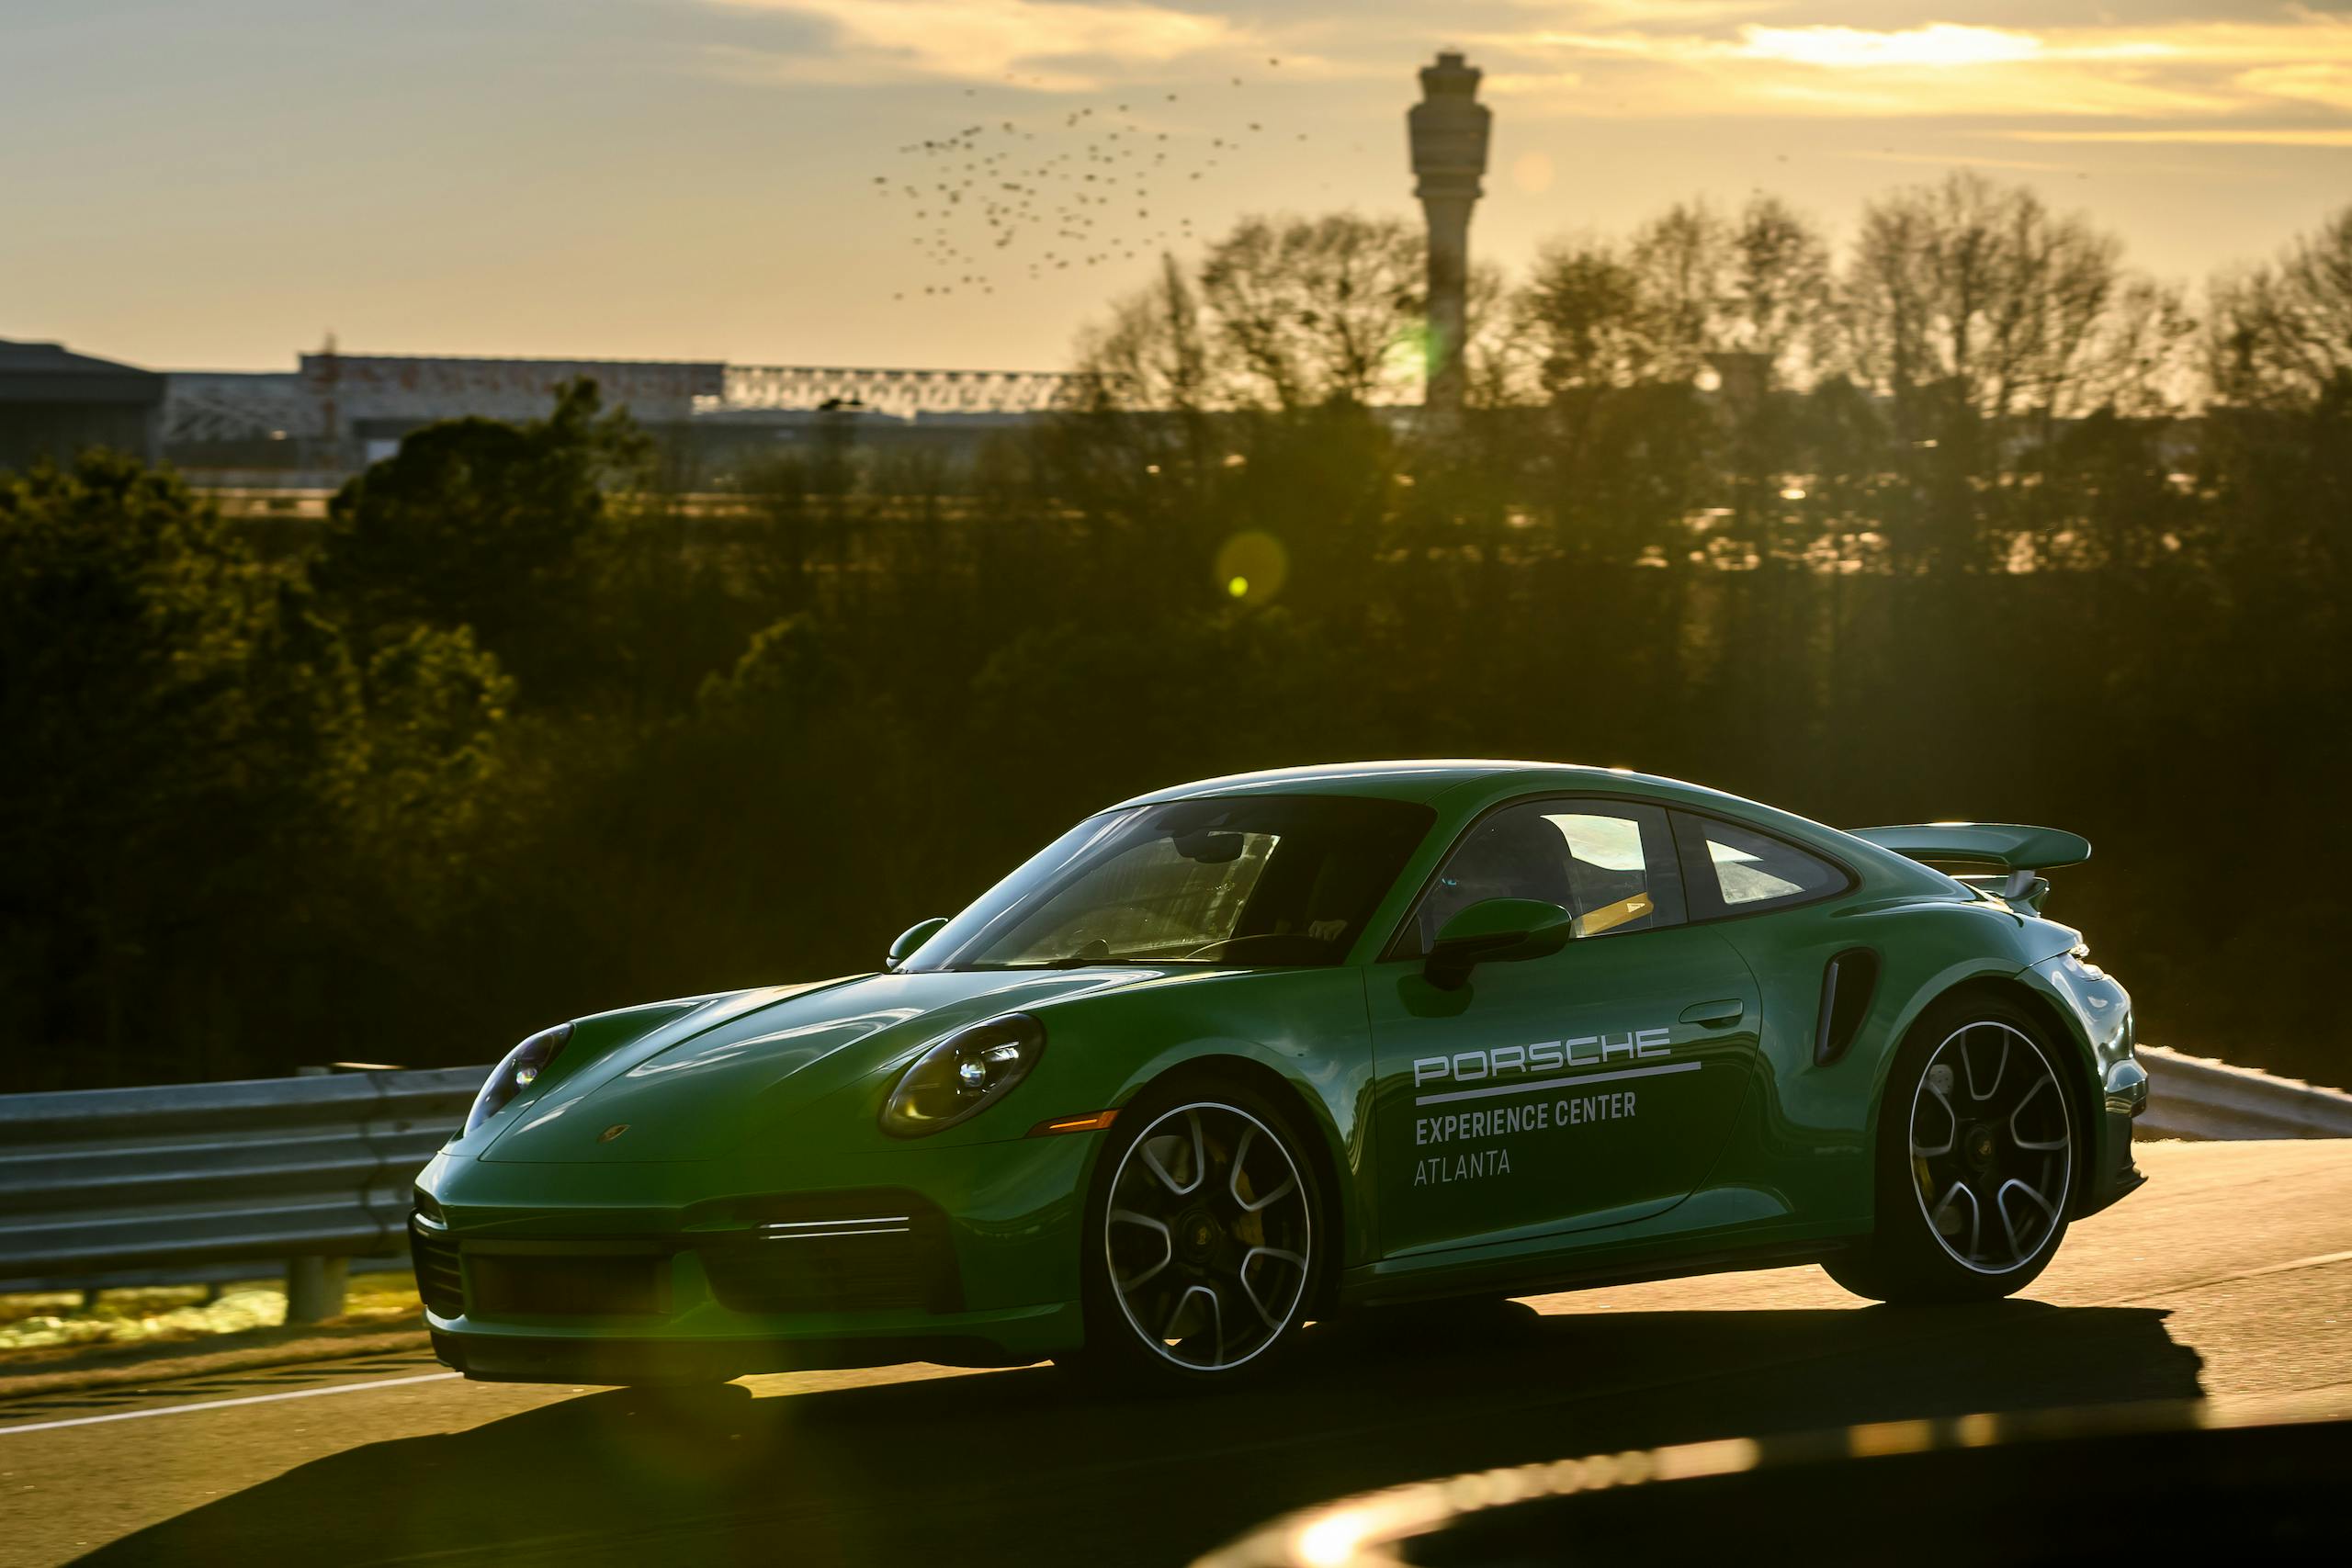 Porsche experience center track dusk